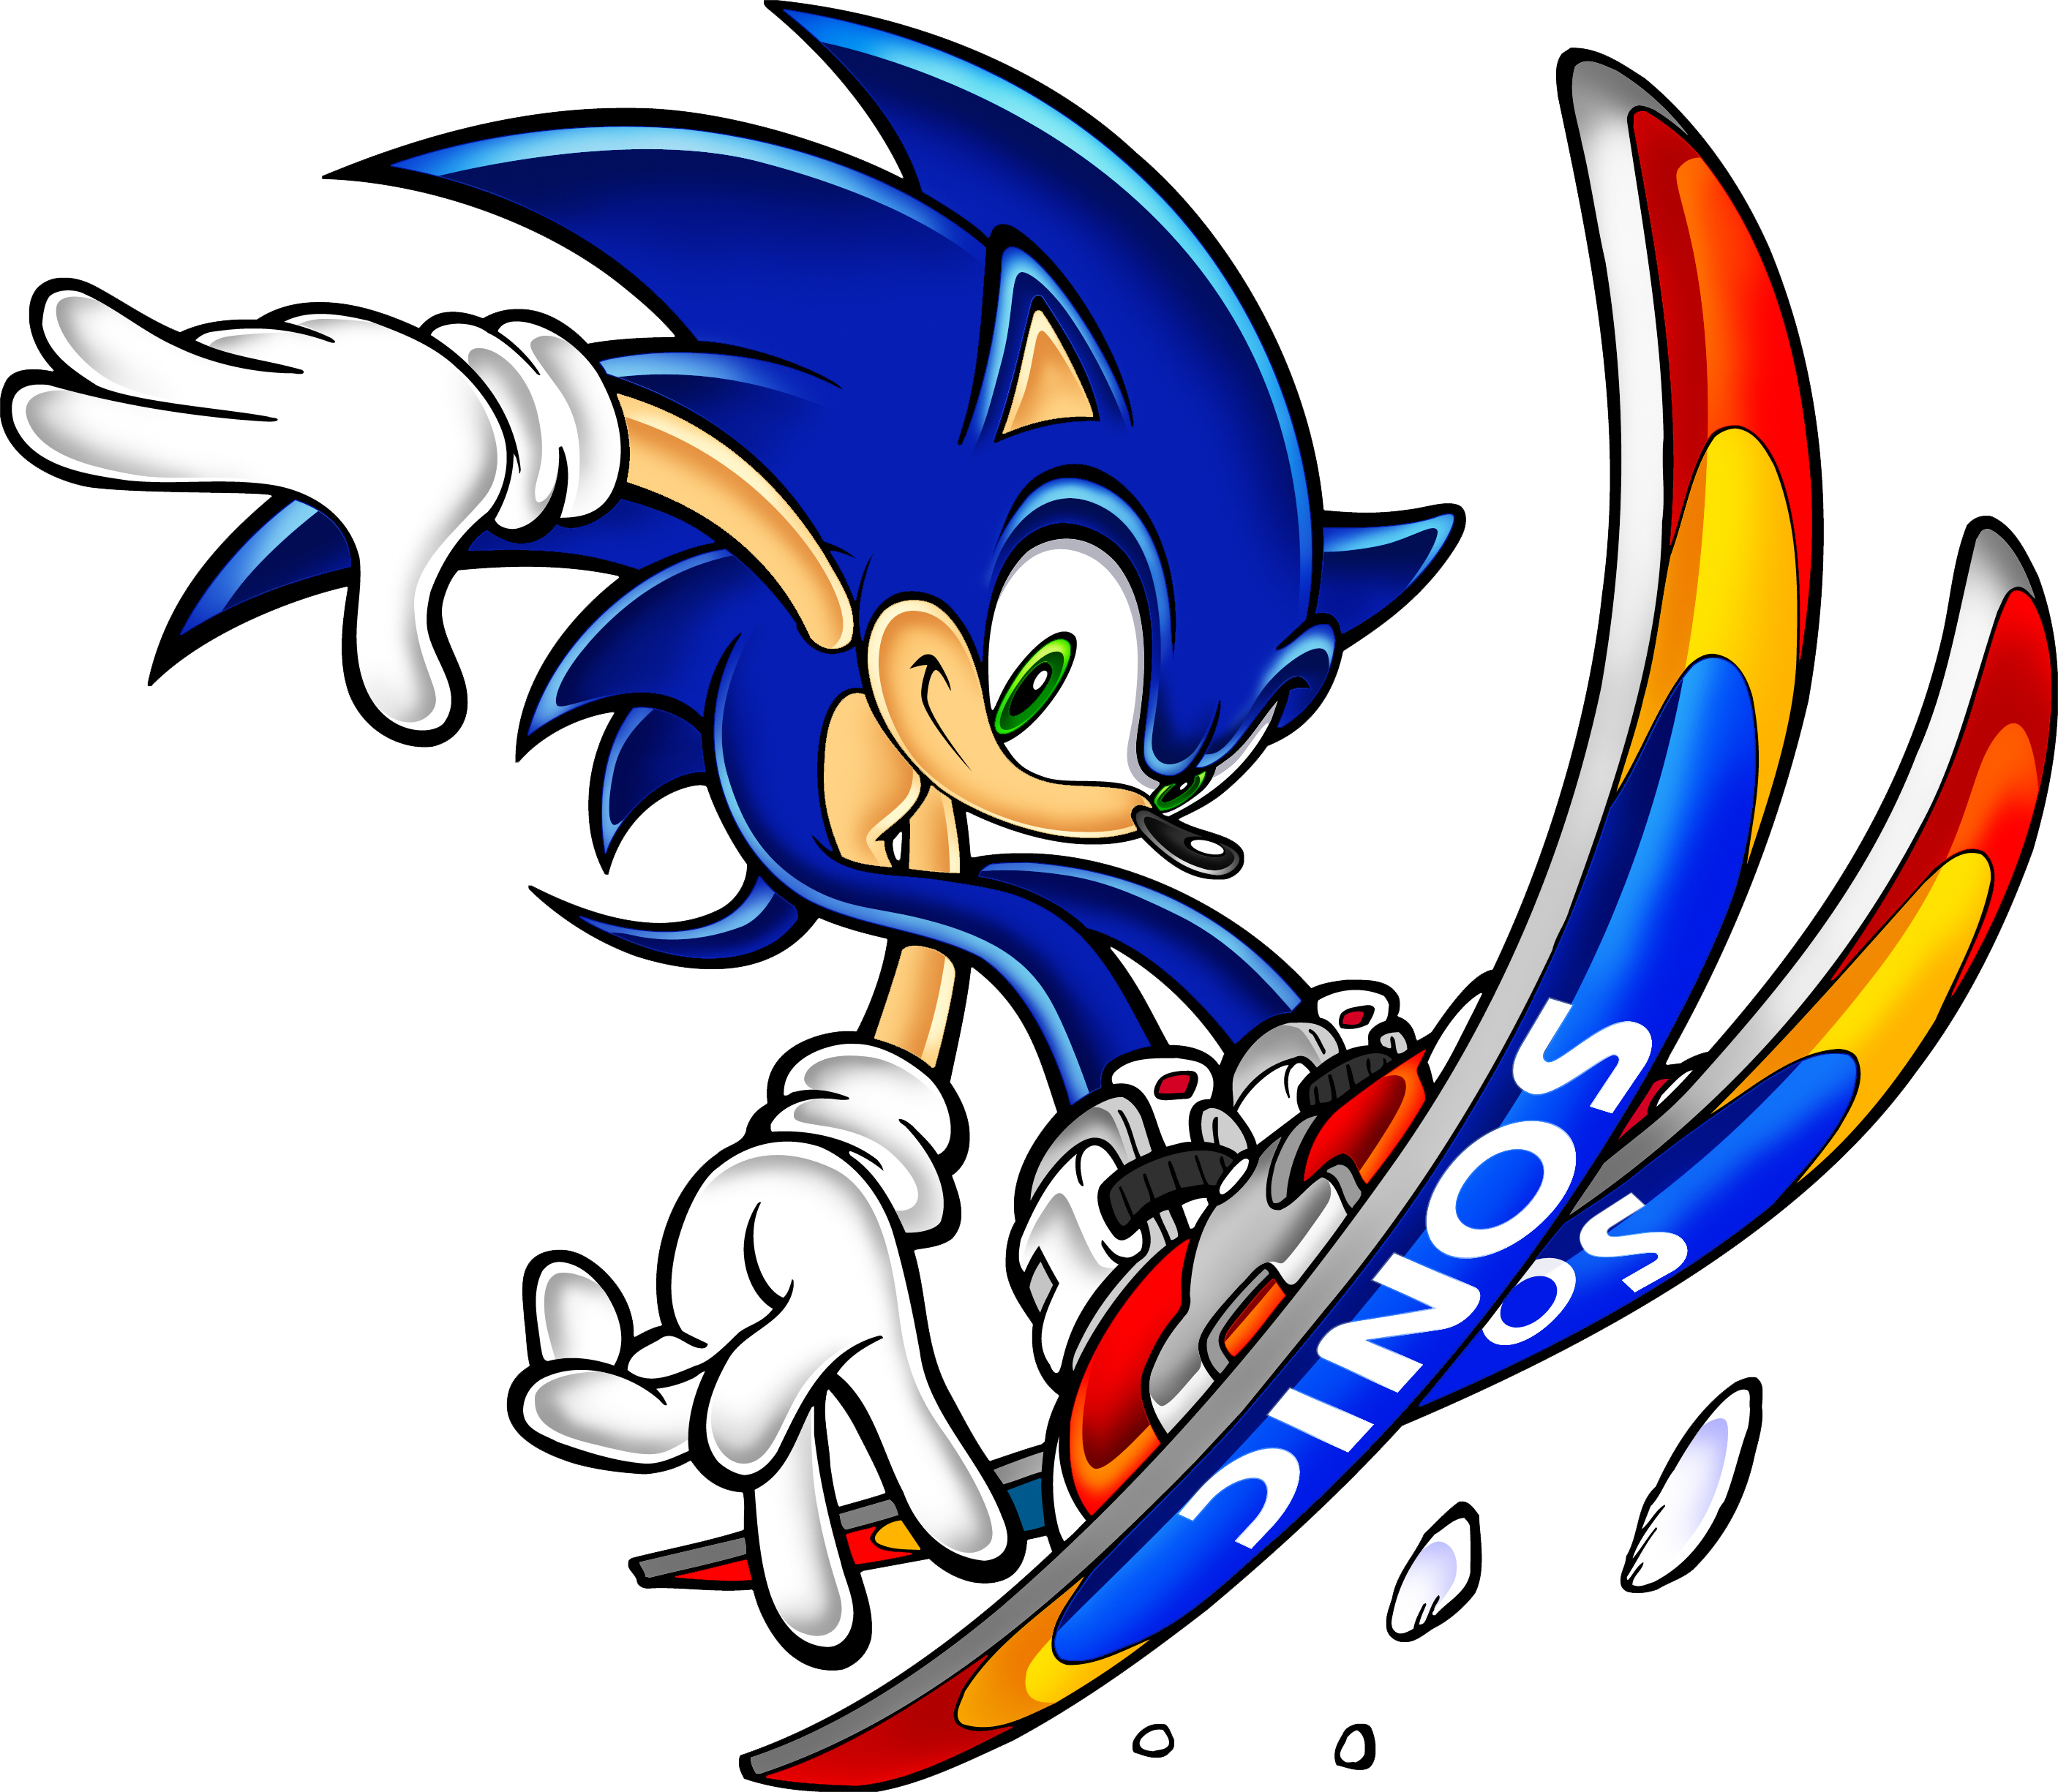  Gambar  Kartun  Sonic Graffiti  Sobgrafiti